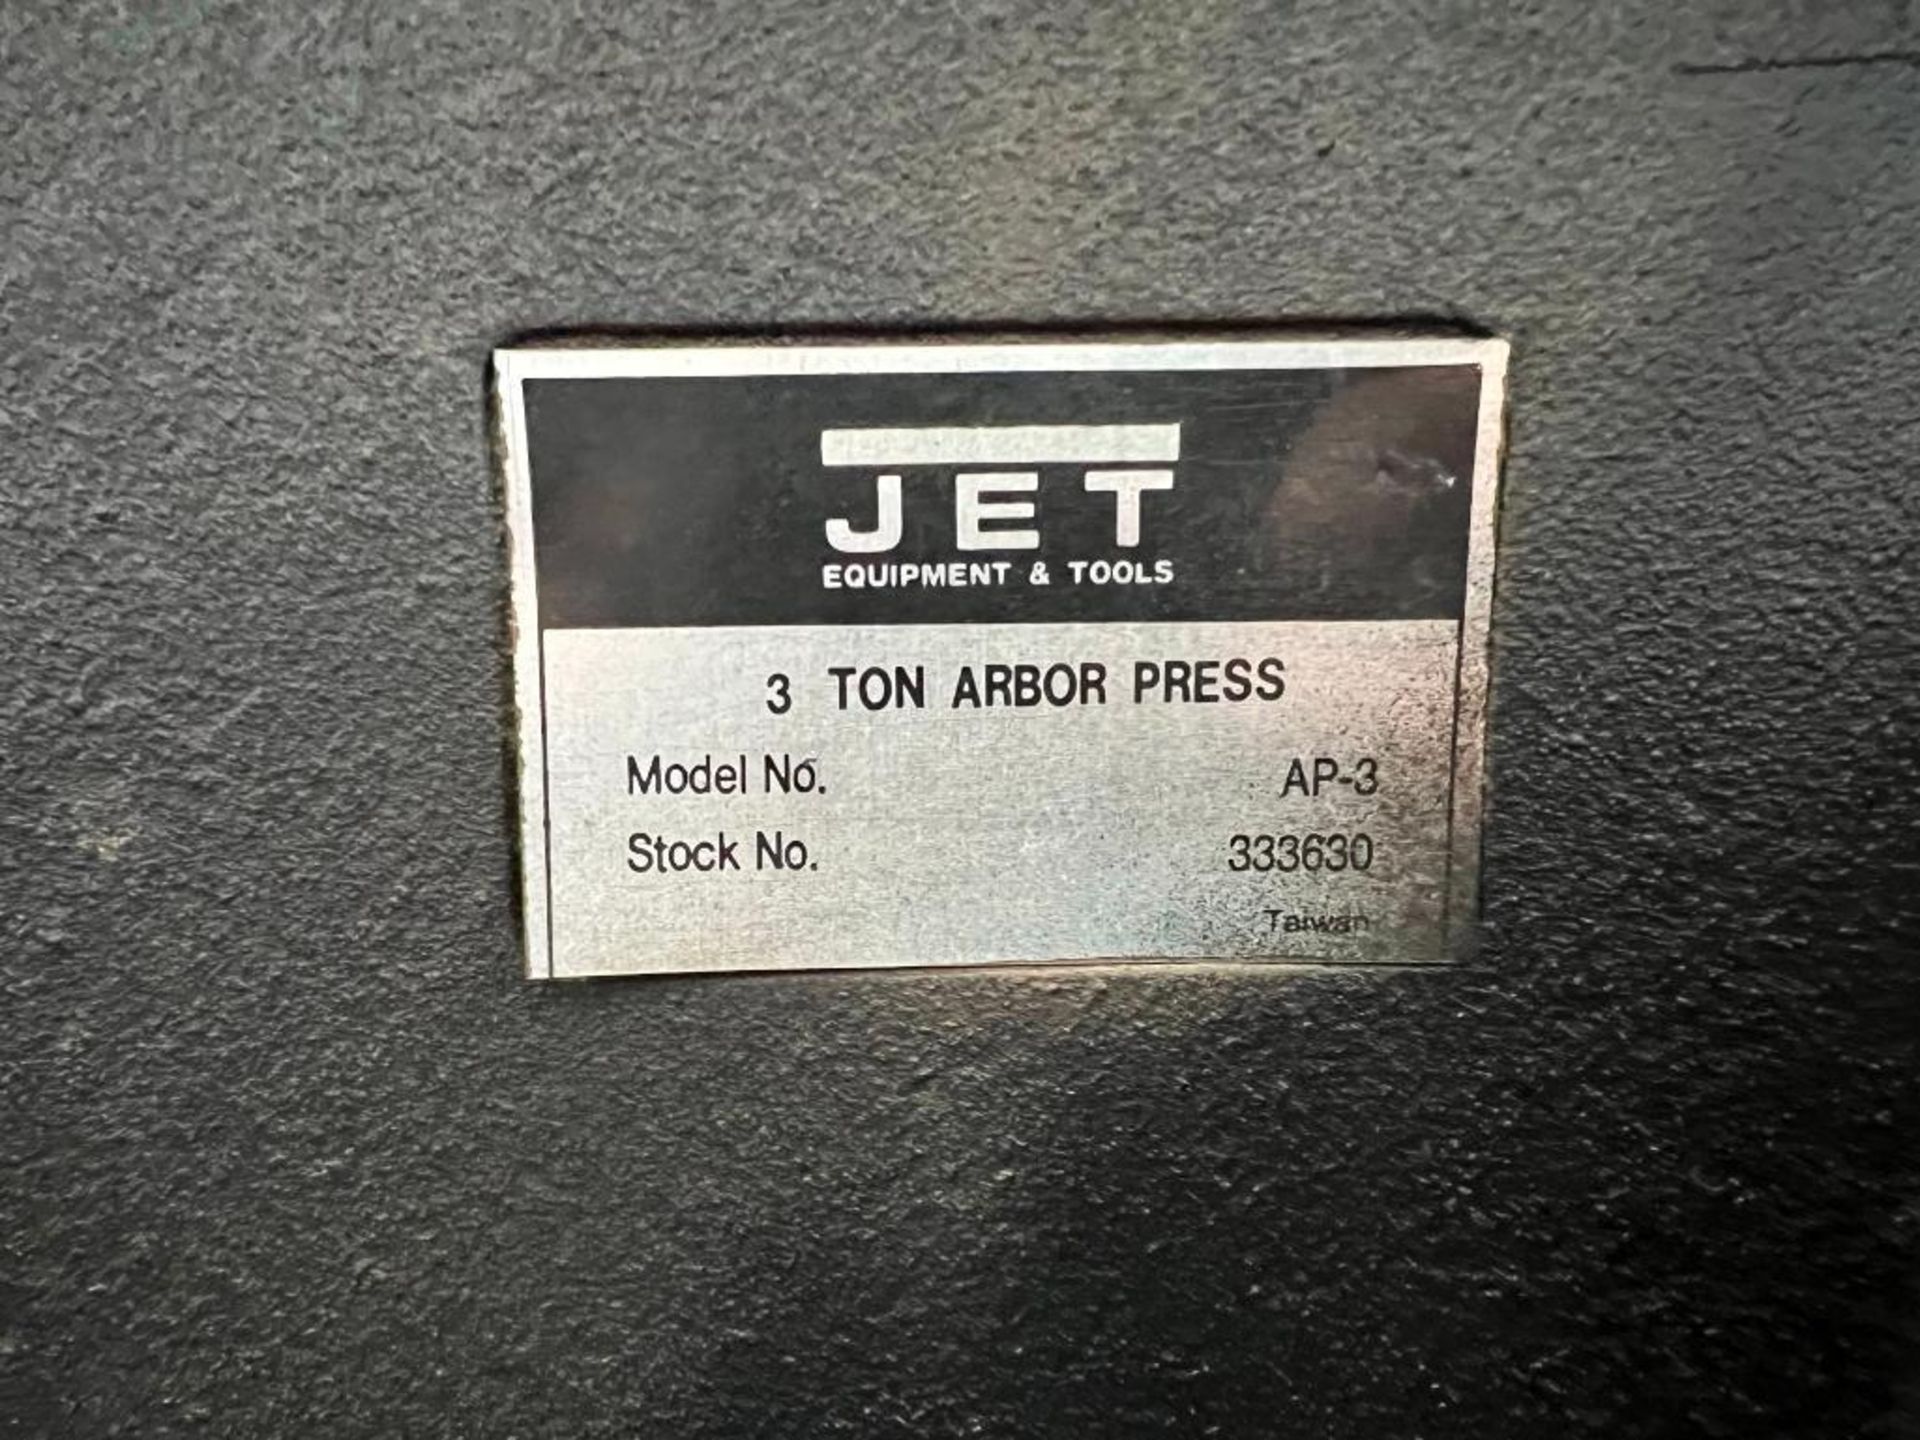 Jet Equipment & Tools 3 Ton Arbor Press, model AP-3 - Image 9 of 9